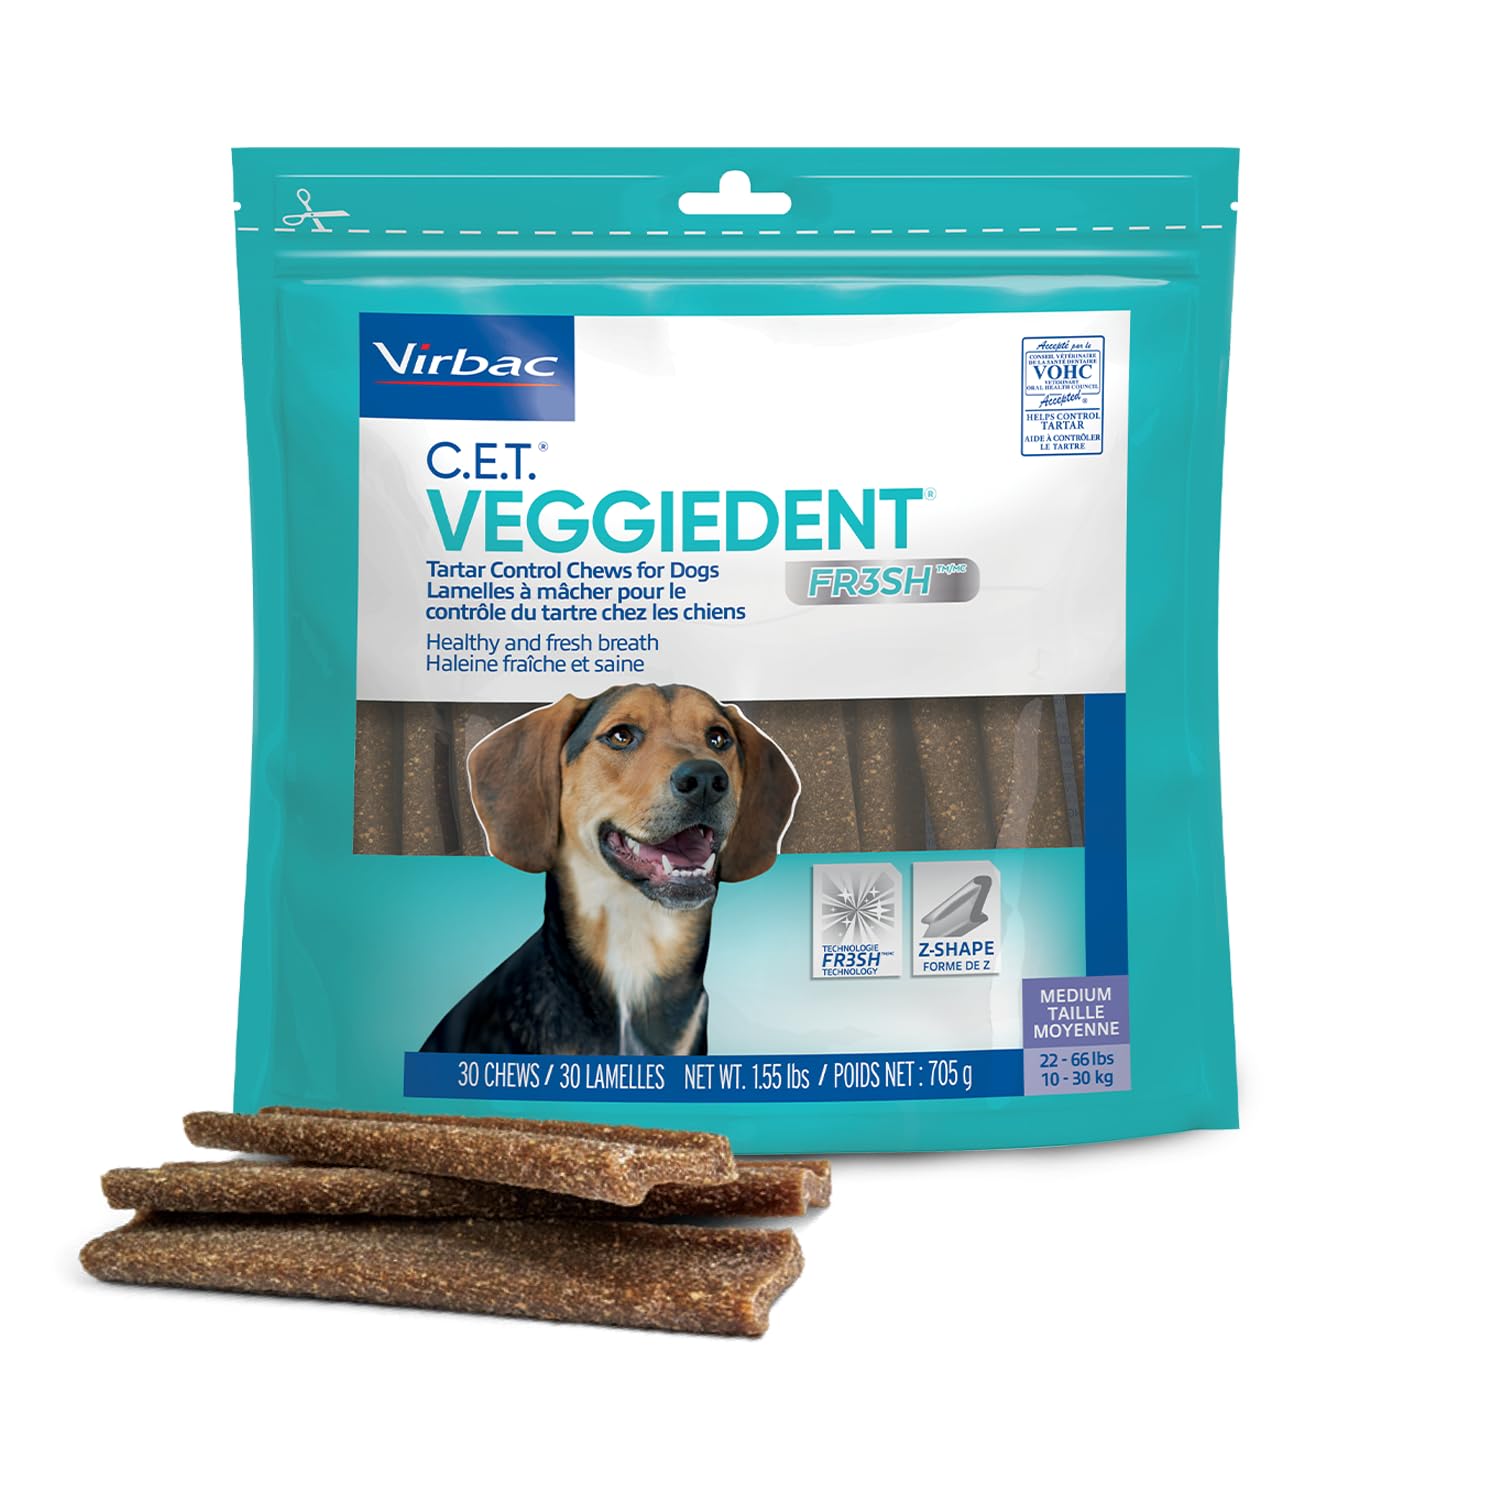 CET_VEGGIEDENT_Tartar_Control_Chews_for_Dogs